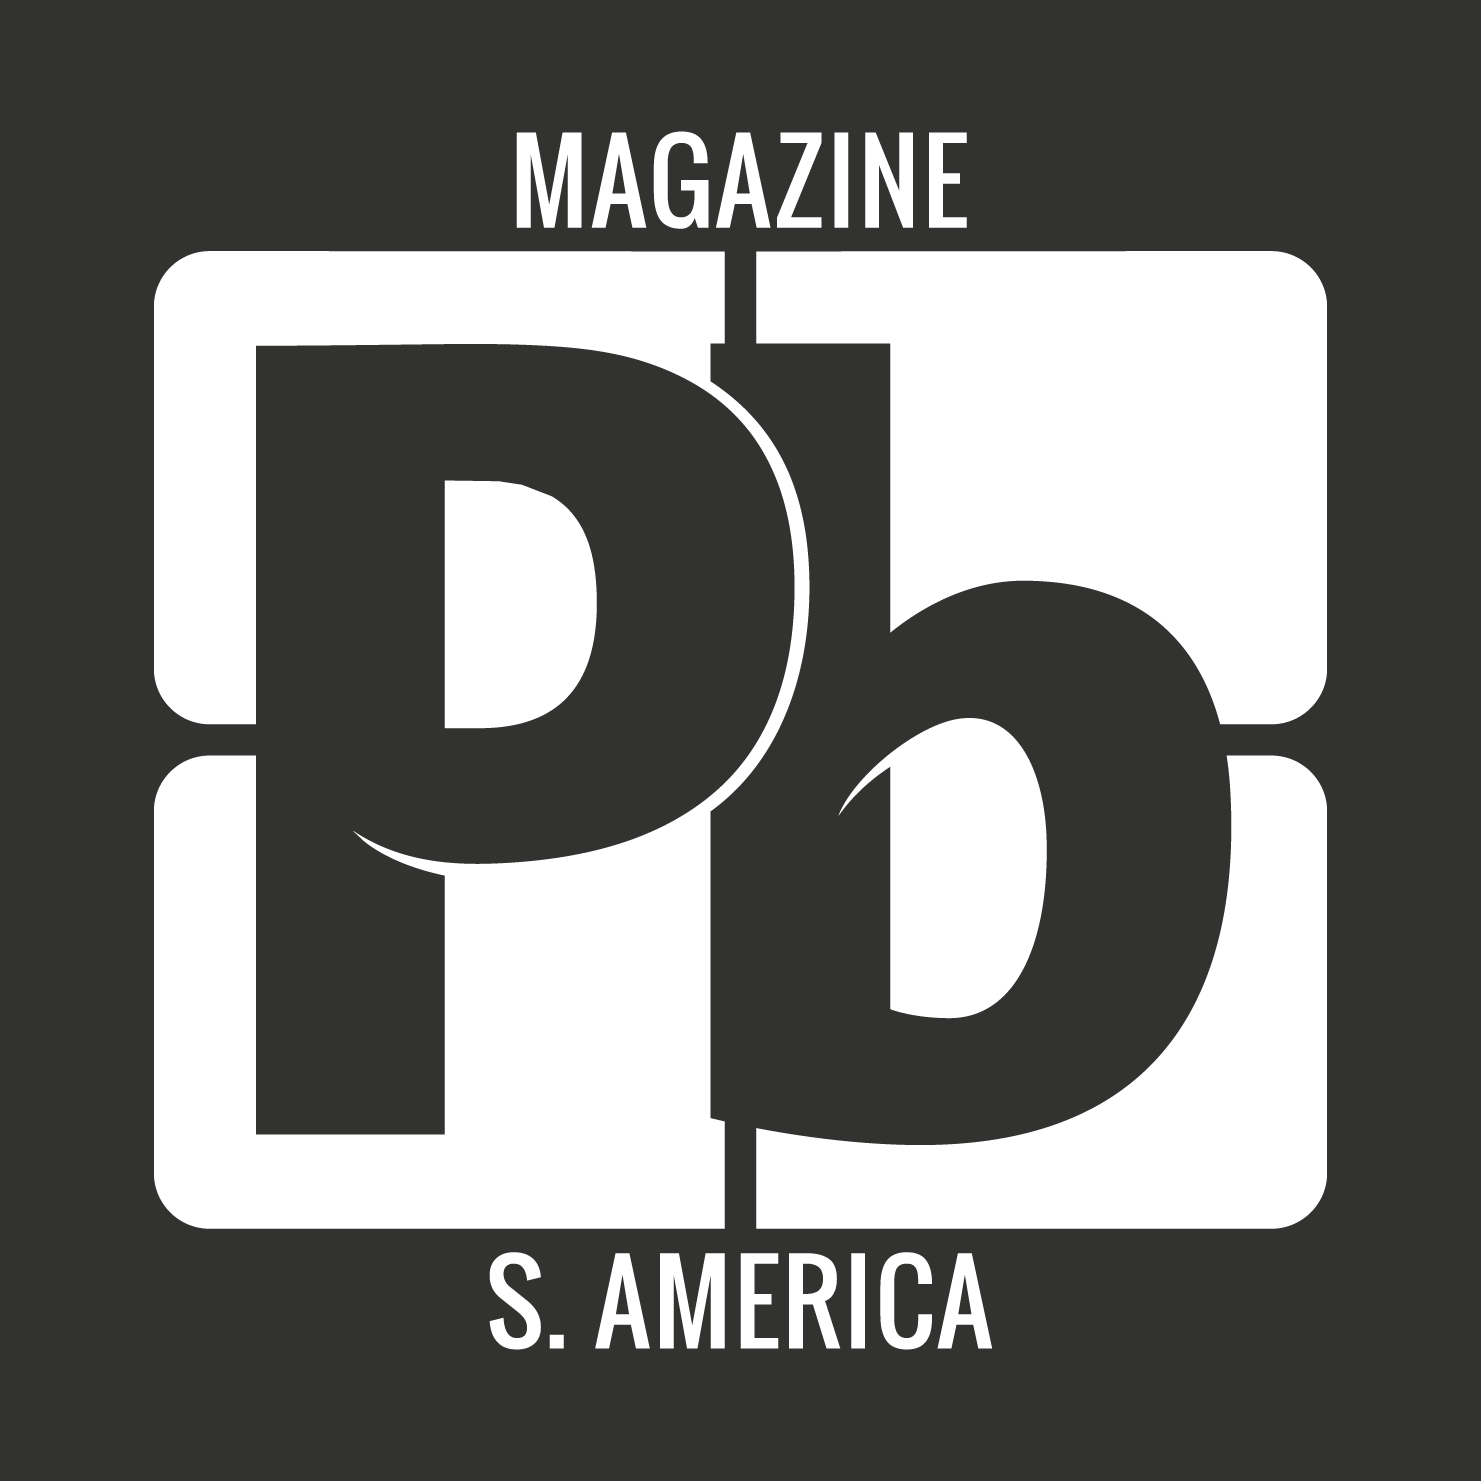 PB Magazine